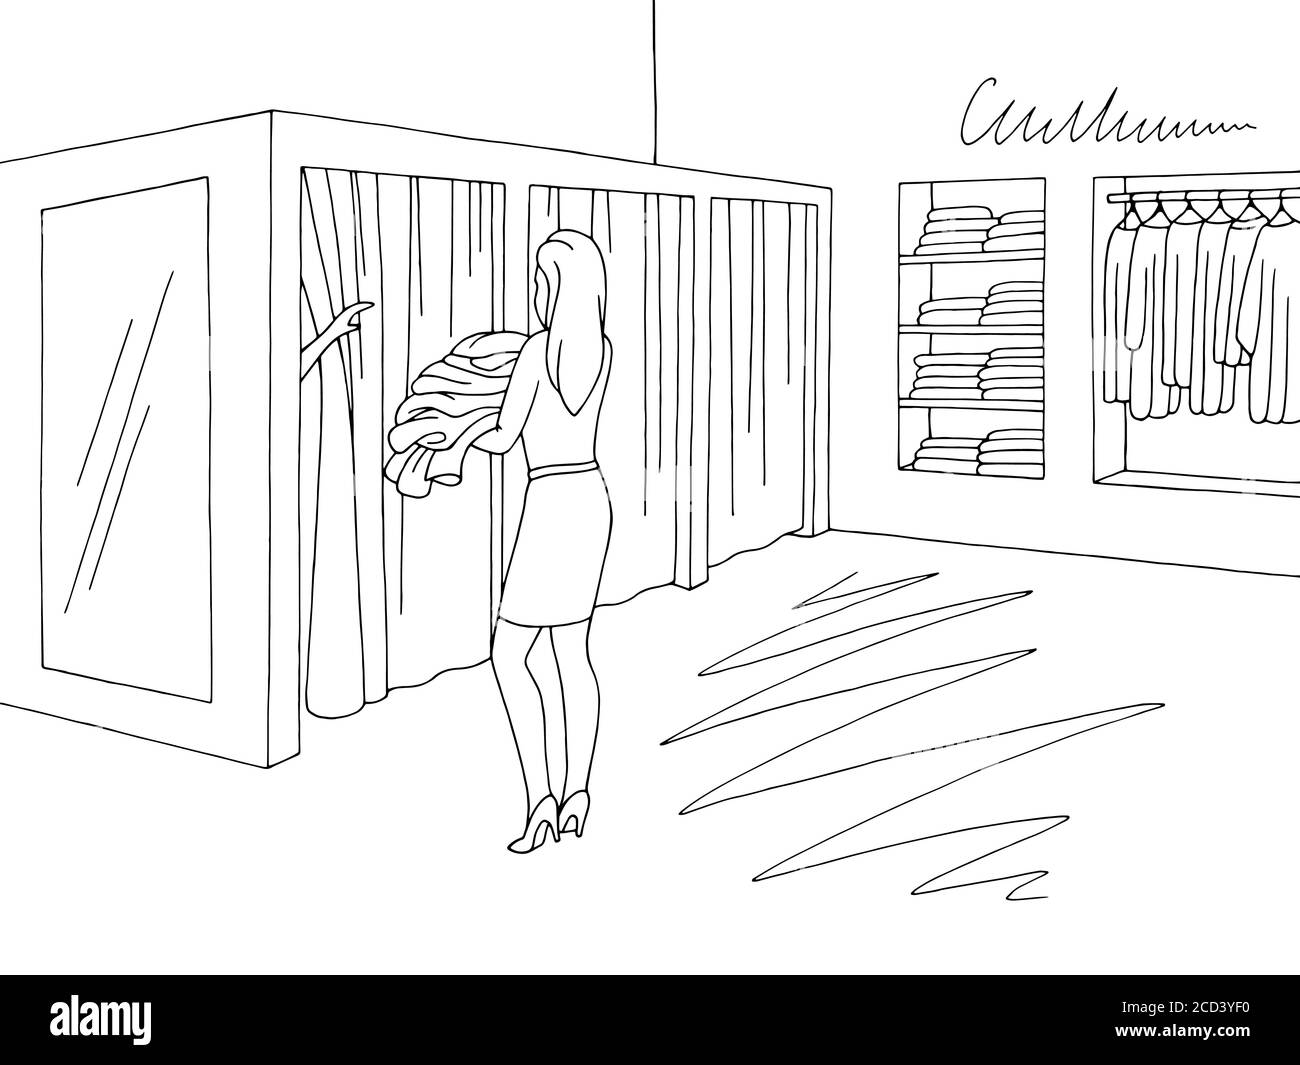 Verkäufer trägt Kleidung zum Käufer in Umkleidezimmer. Shop Interior Grafik schwarz weiß Skizze Illustration Vektor Stock Vektor